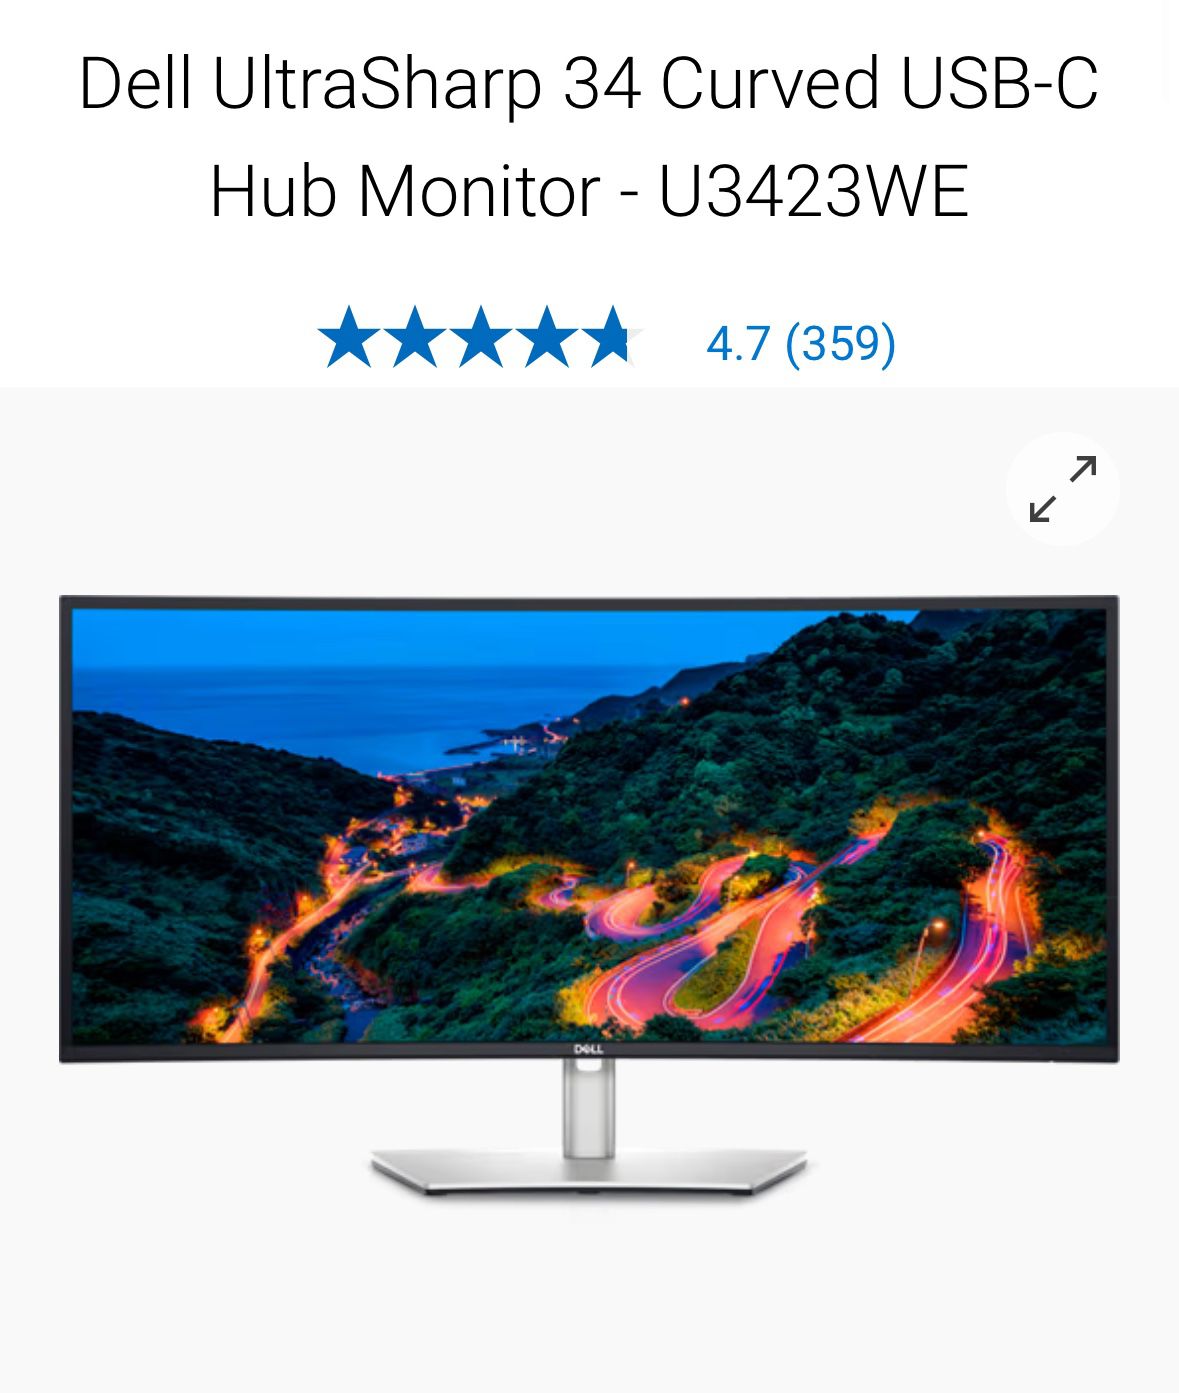 Dell UltraSharp 34 Curved USB-C Hub Monitor - U3423WE